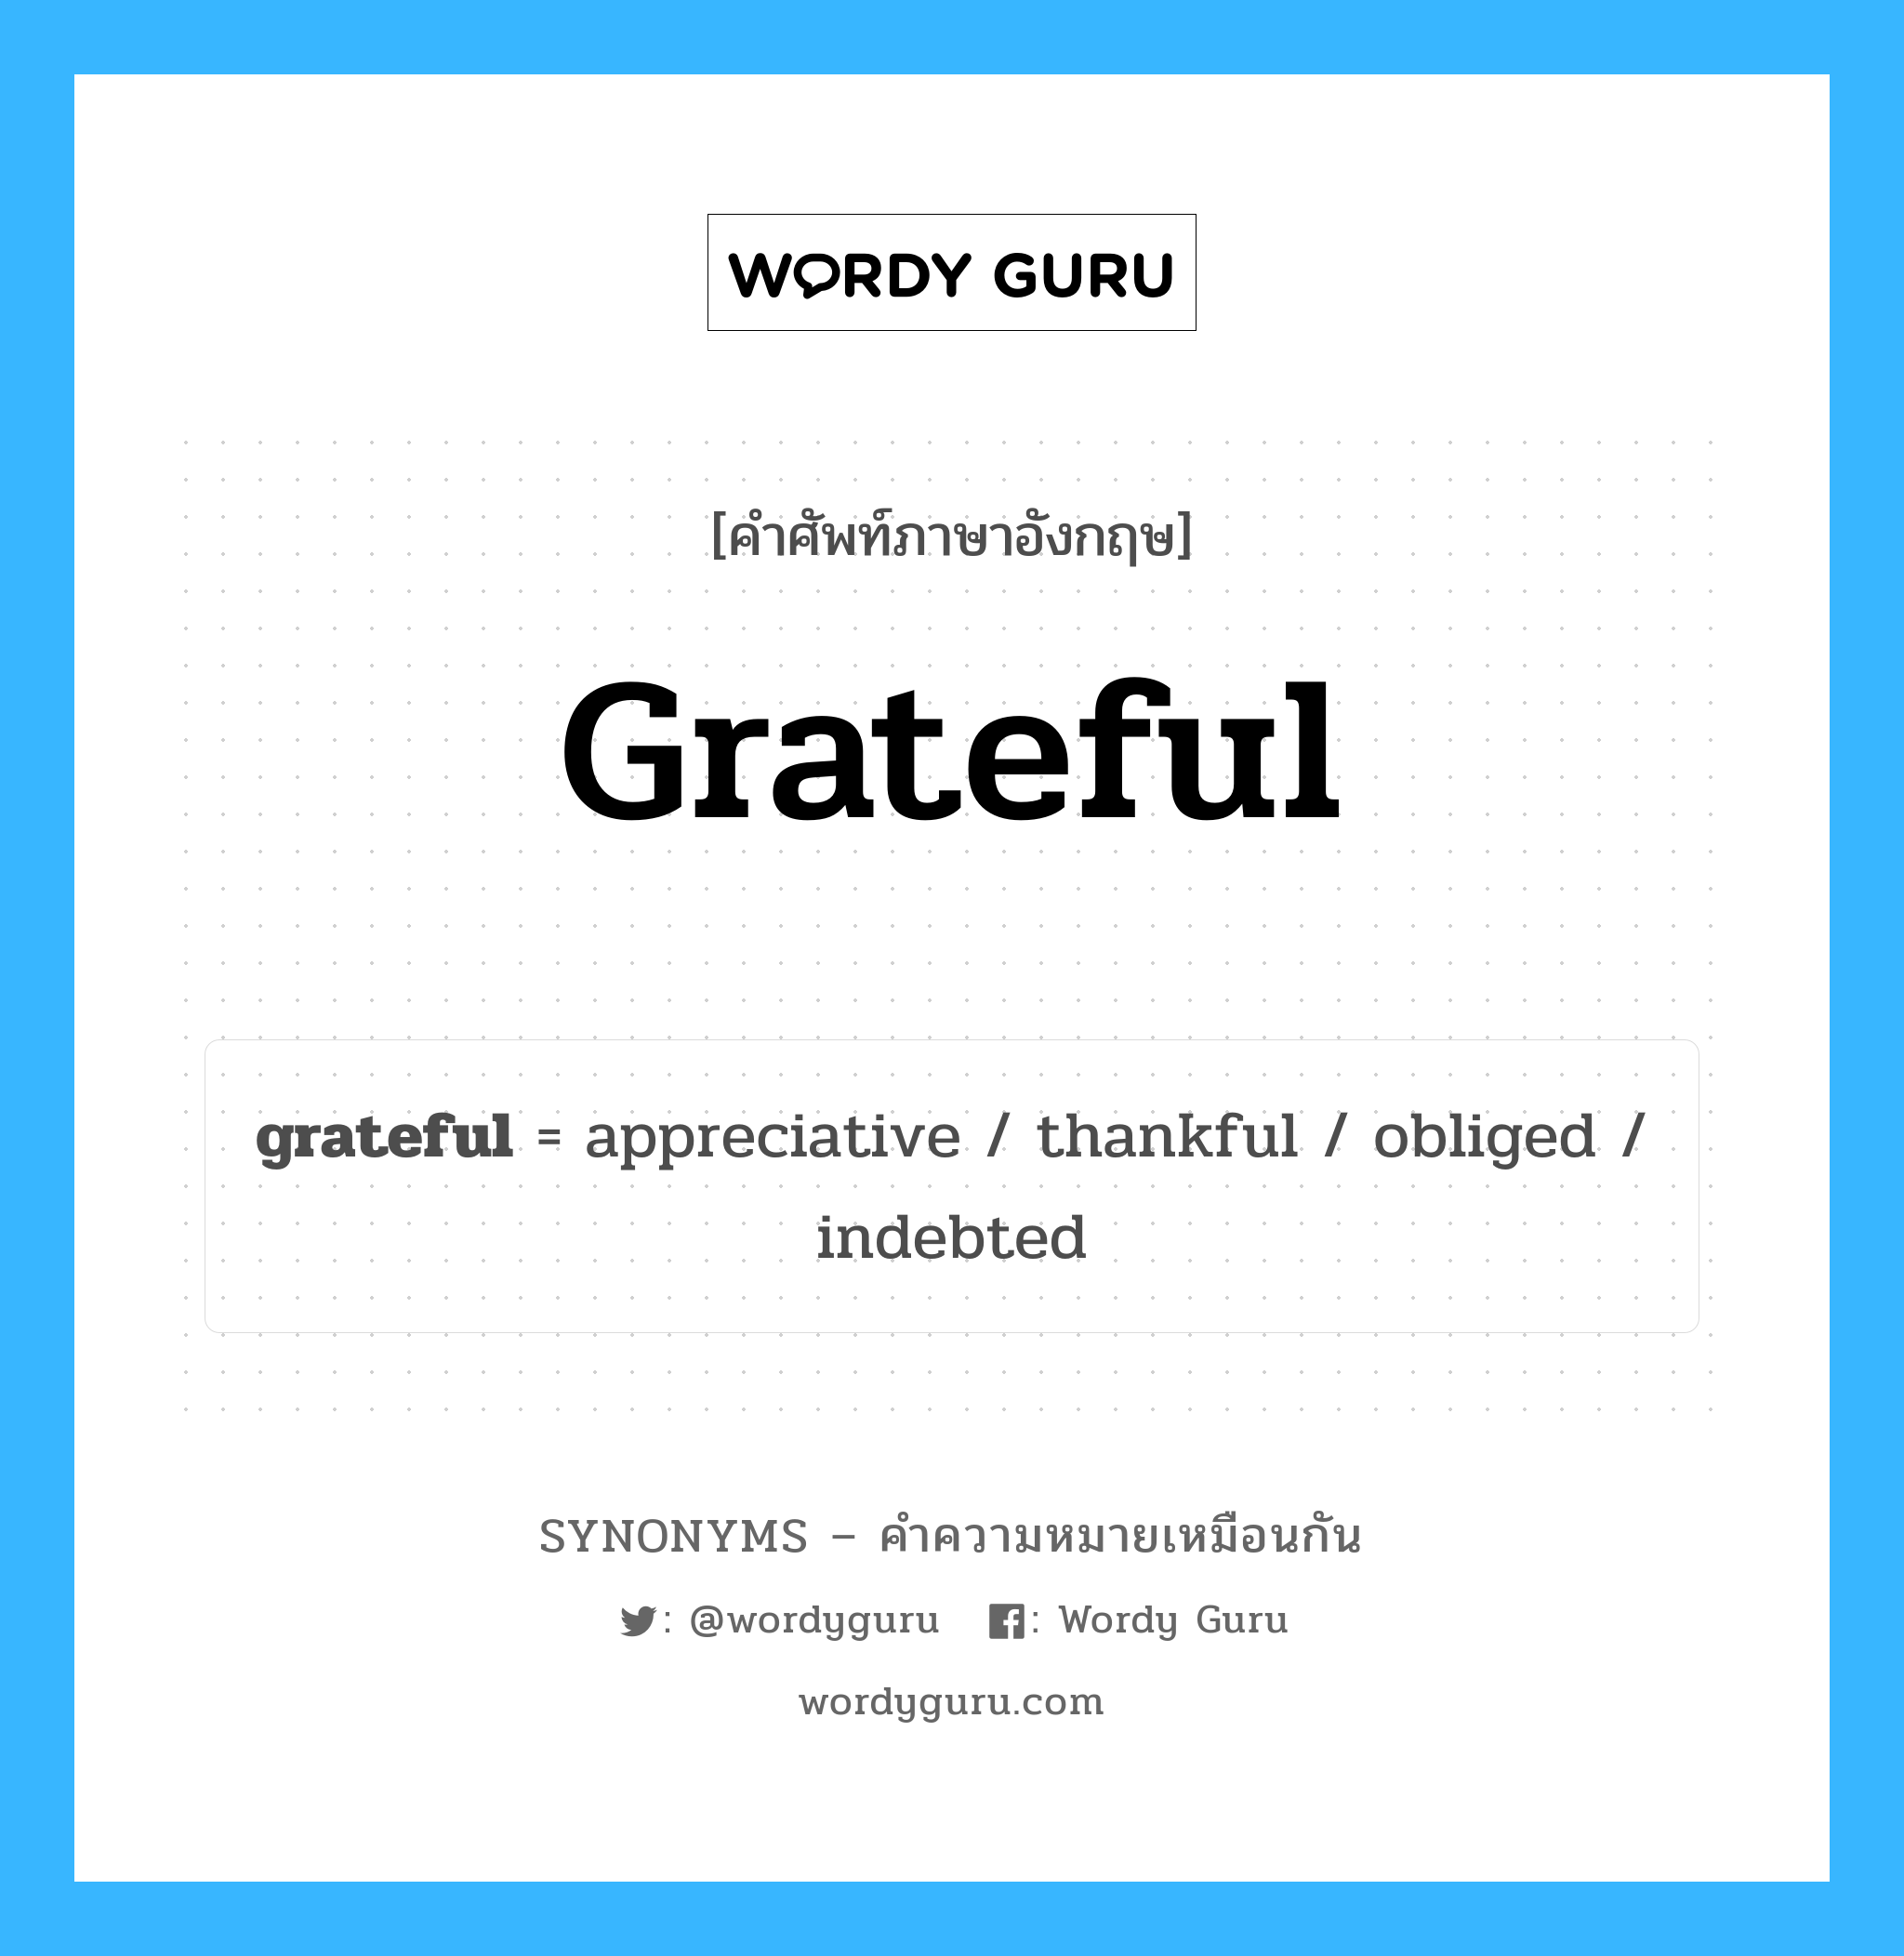 appreciative เป็นหนึ่งใน grateful และมีคำอื่น ๆ อีกดังนี้, คำศัพท์ภาษาอังกฤษ appreciative ความหมายคล้ายกันกับ grateful แปลว่า ชื่นชม หมวด grateful